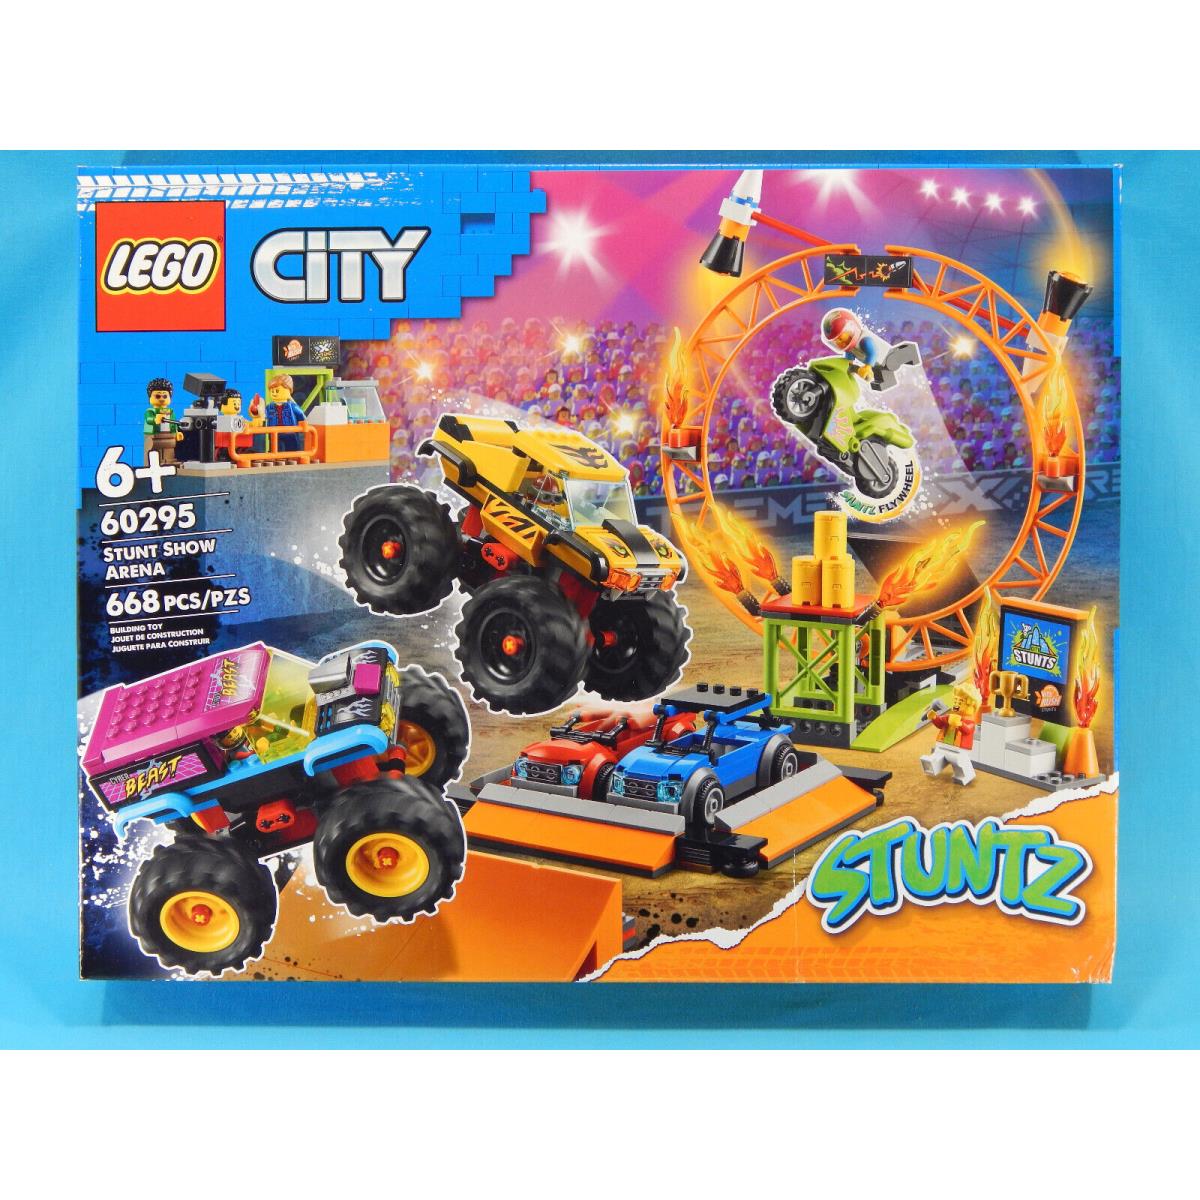 Lego City 60295 Stunt Show Arena 668pcs 2021 Stuntz Minor Dented Box